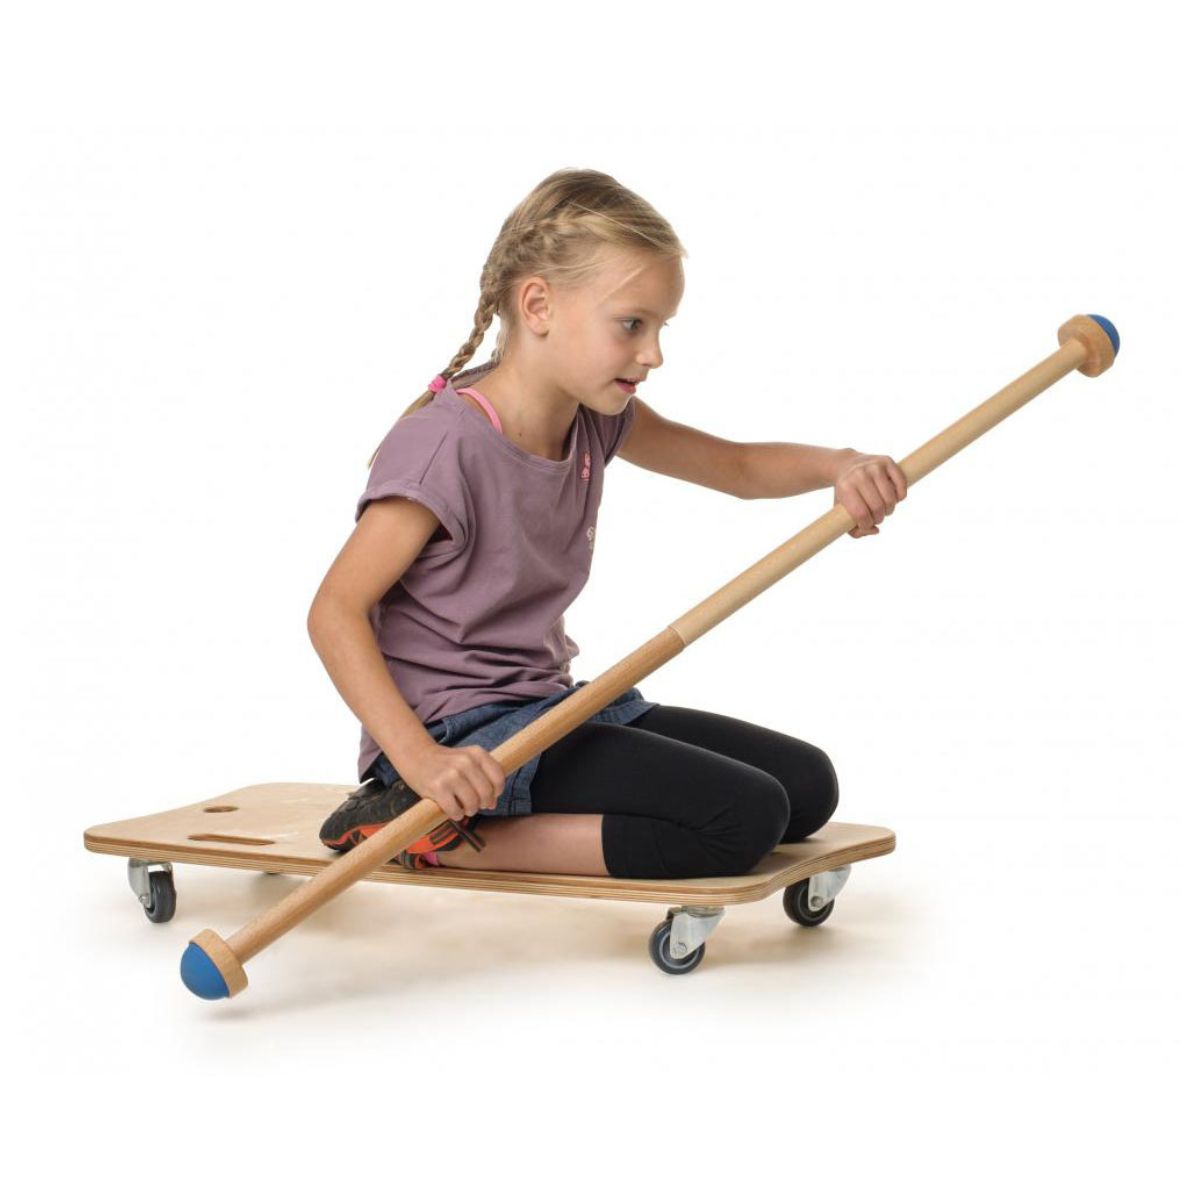 Erzi: Holzbrett auf Rädern, das Maxi -Roller -Board -Skateboard